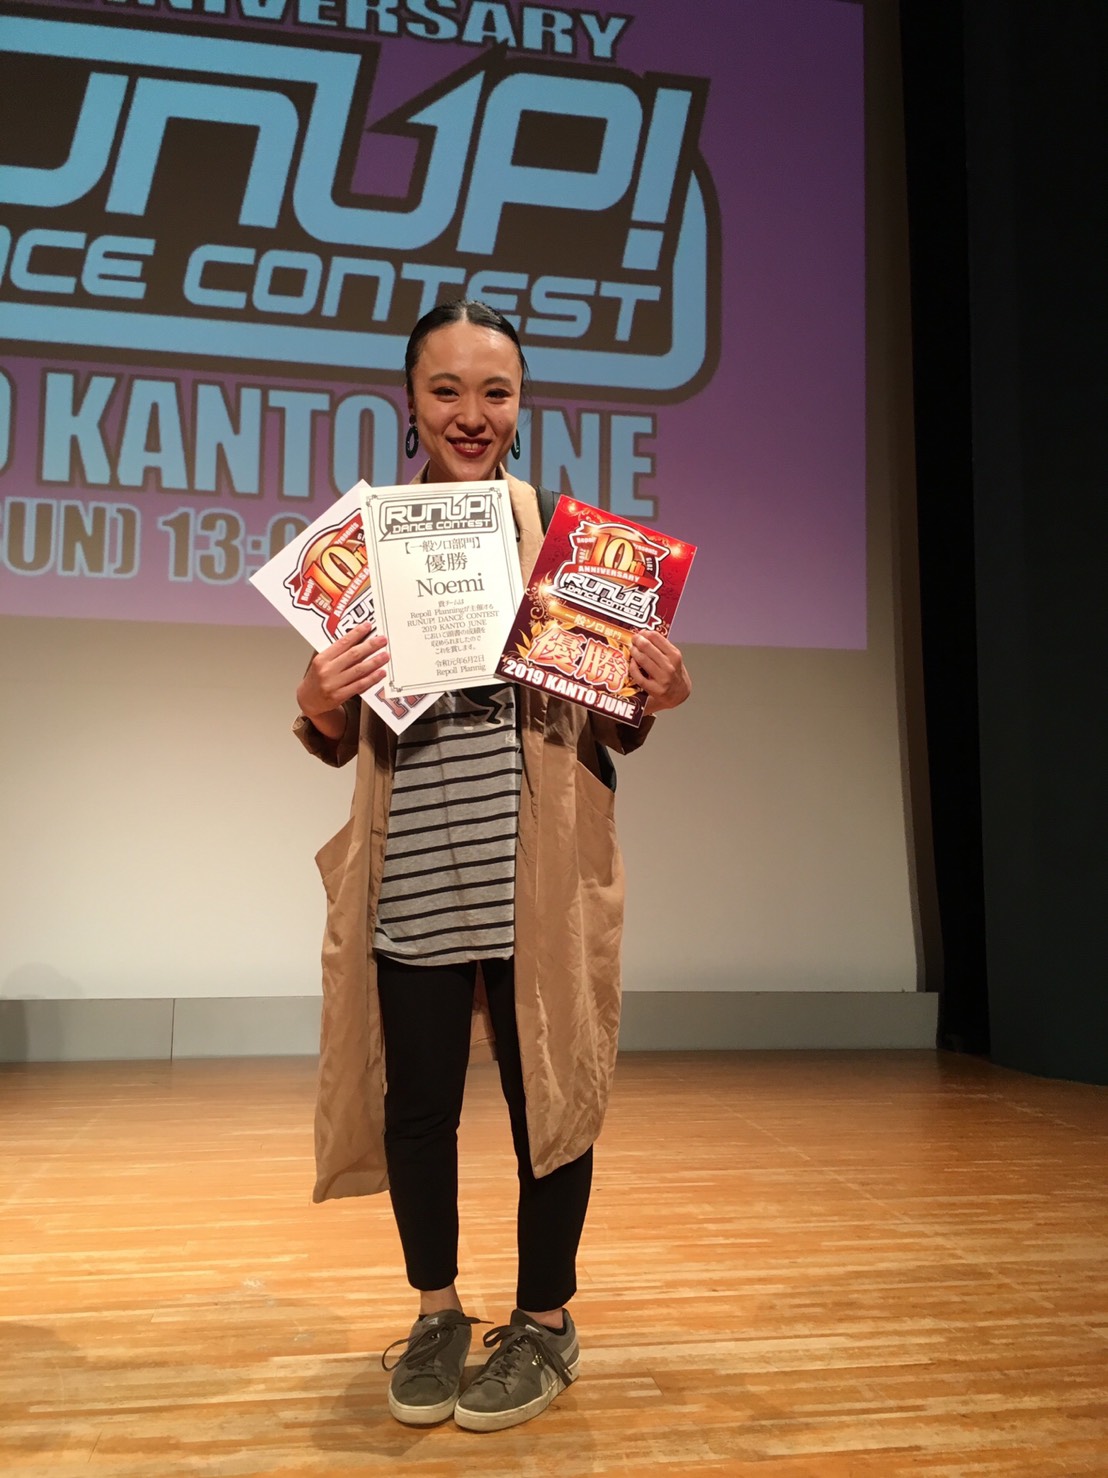 Run Up Dance Contest 19 Kanto結果報告 Studio Fhilter